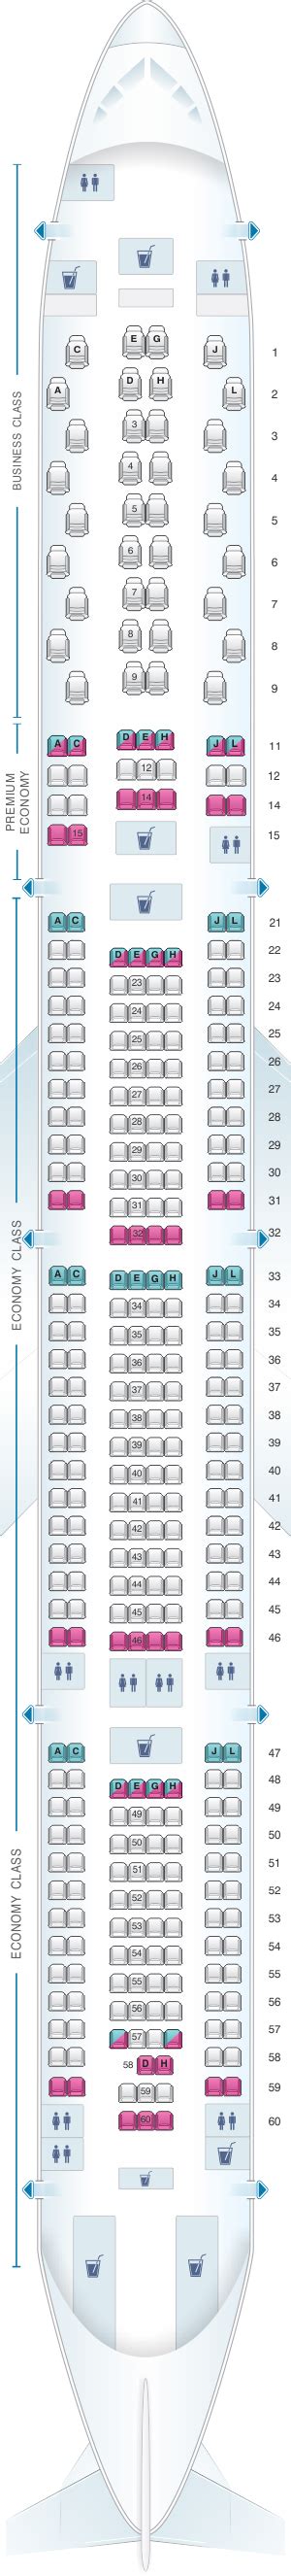 A340 600 Lufthansa Seat Map